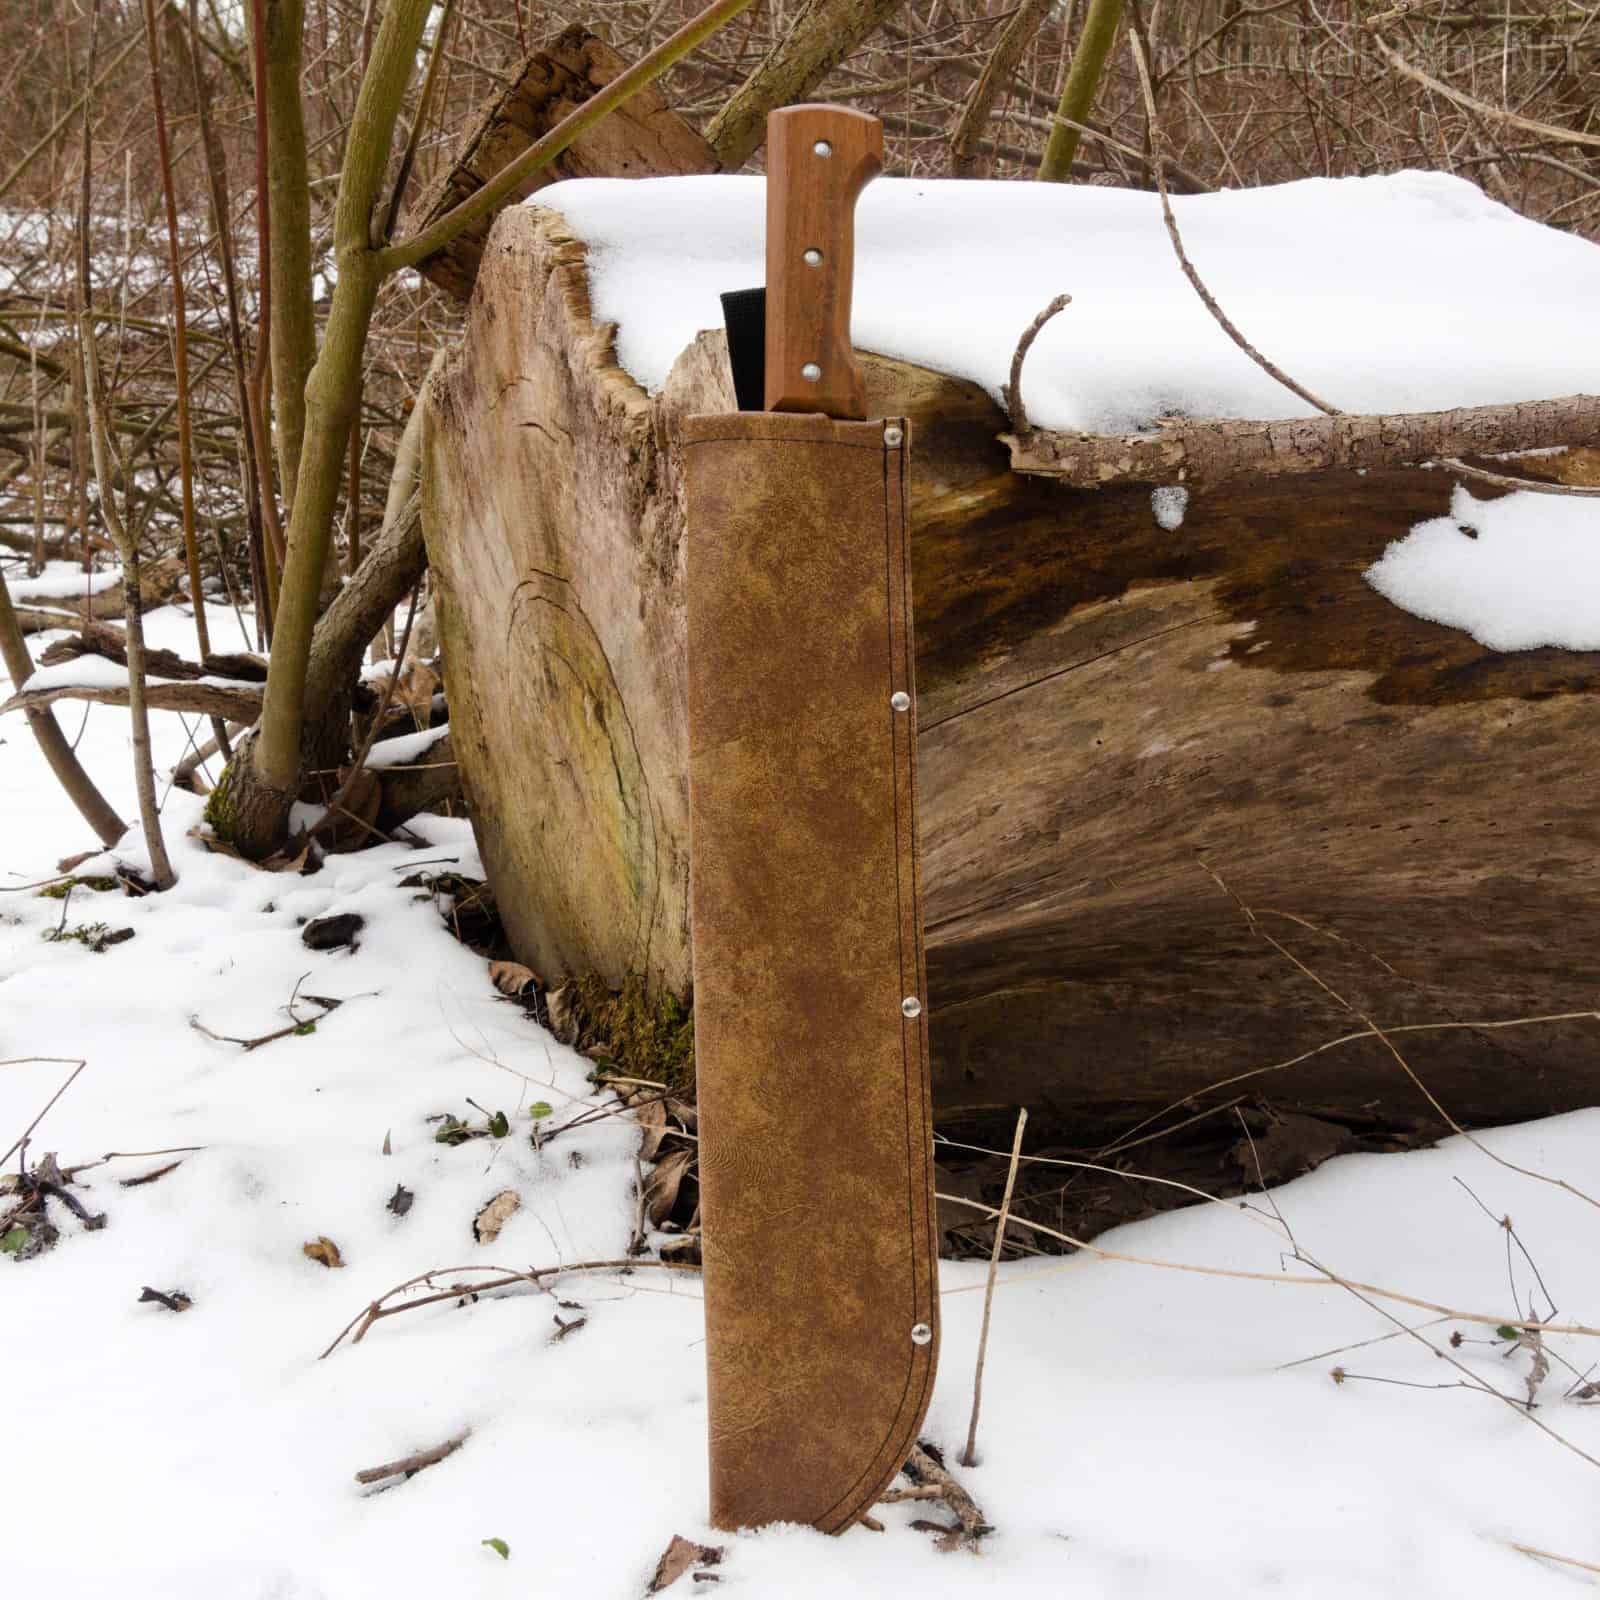 machete in sheath next to log